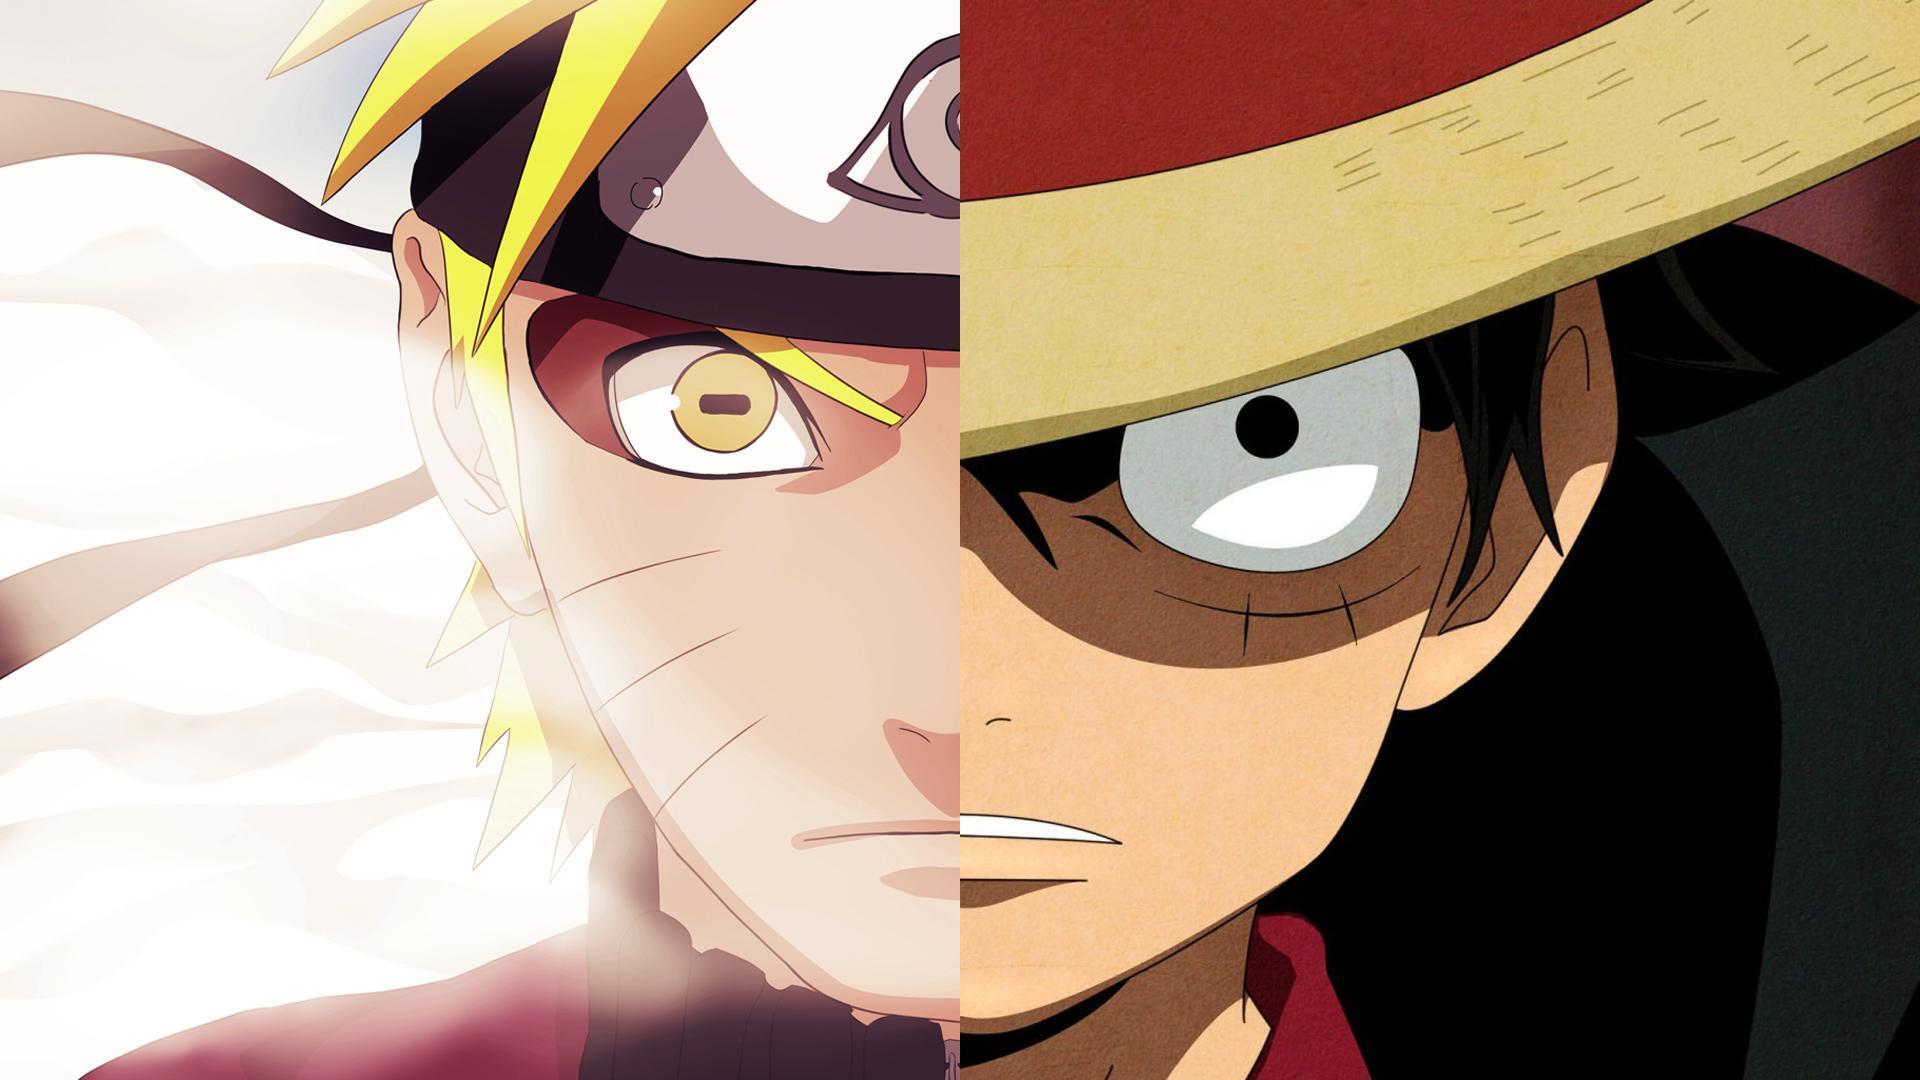 Naruto vs. Luffy: Who Would Win?